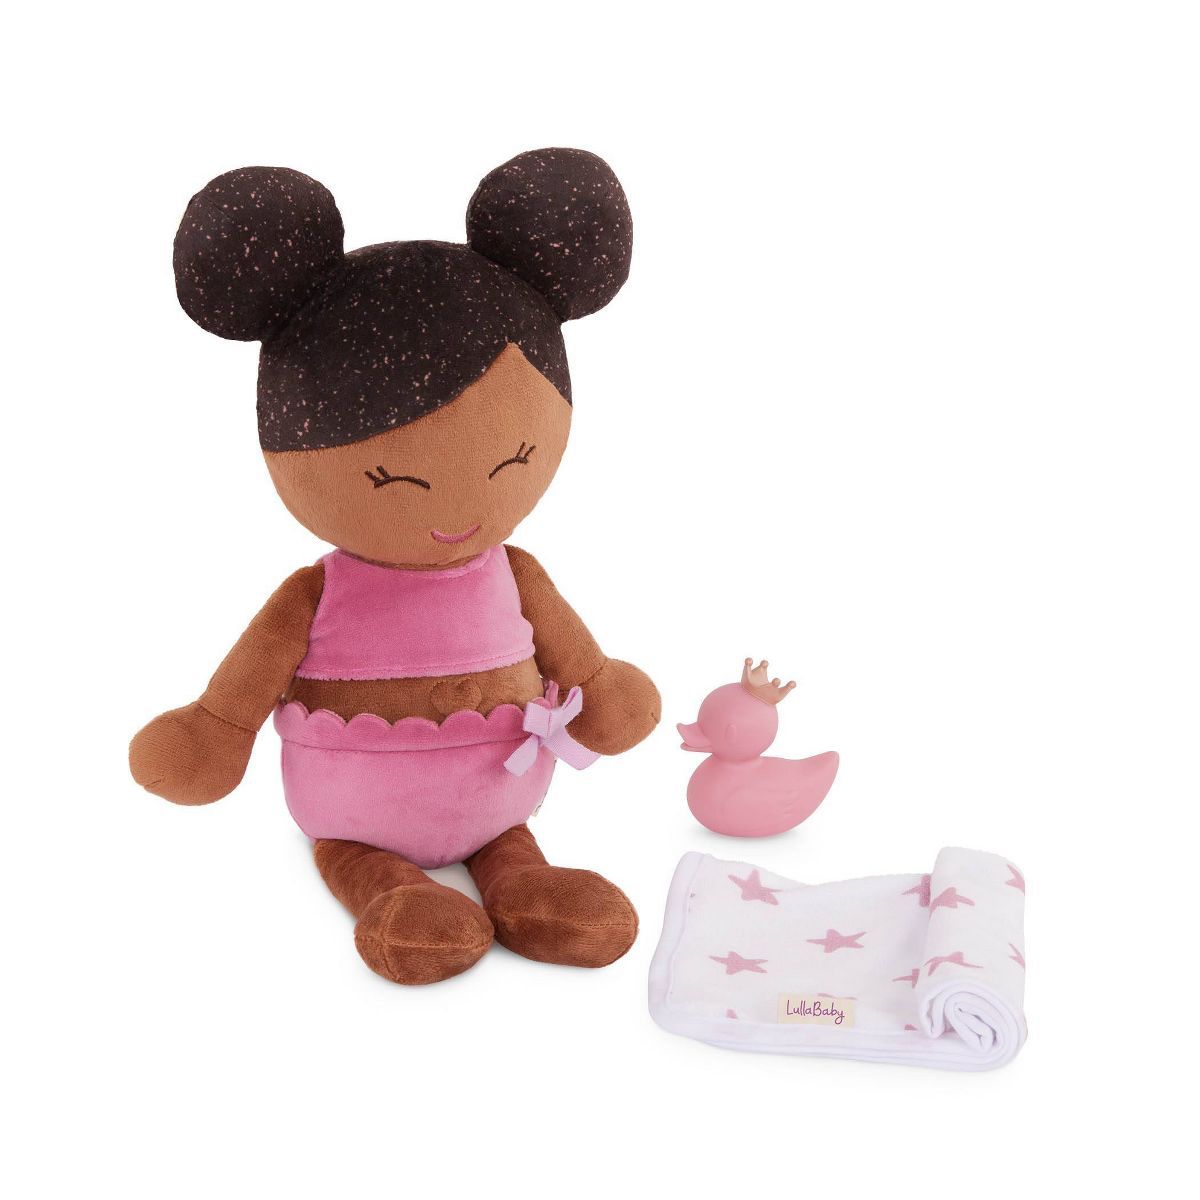 LullaBaby Bath Plush Doll for Real Water Play - Dark-Brown Hair | Target